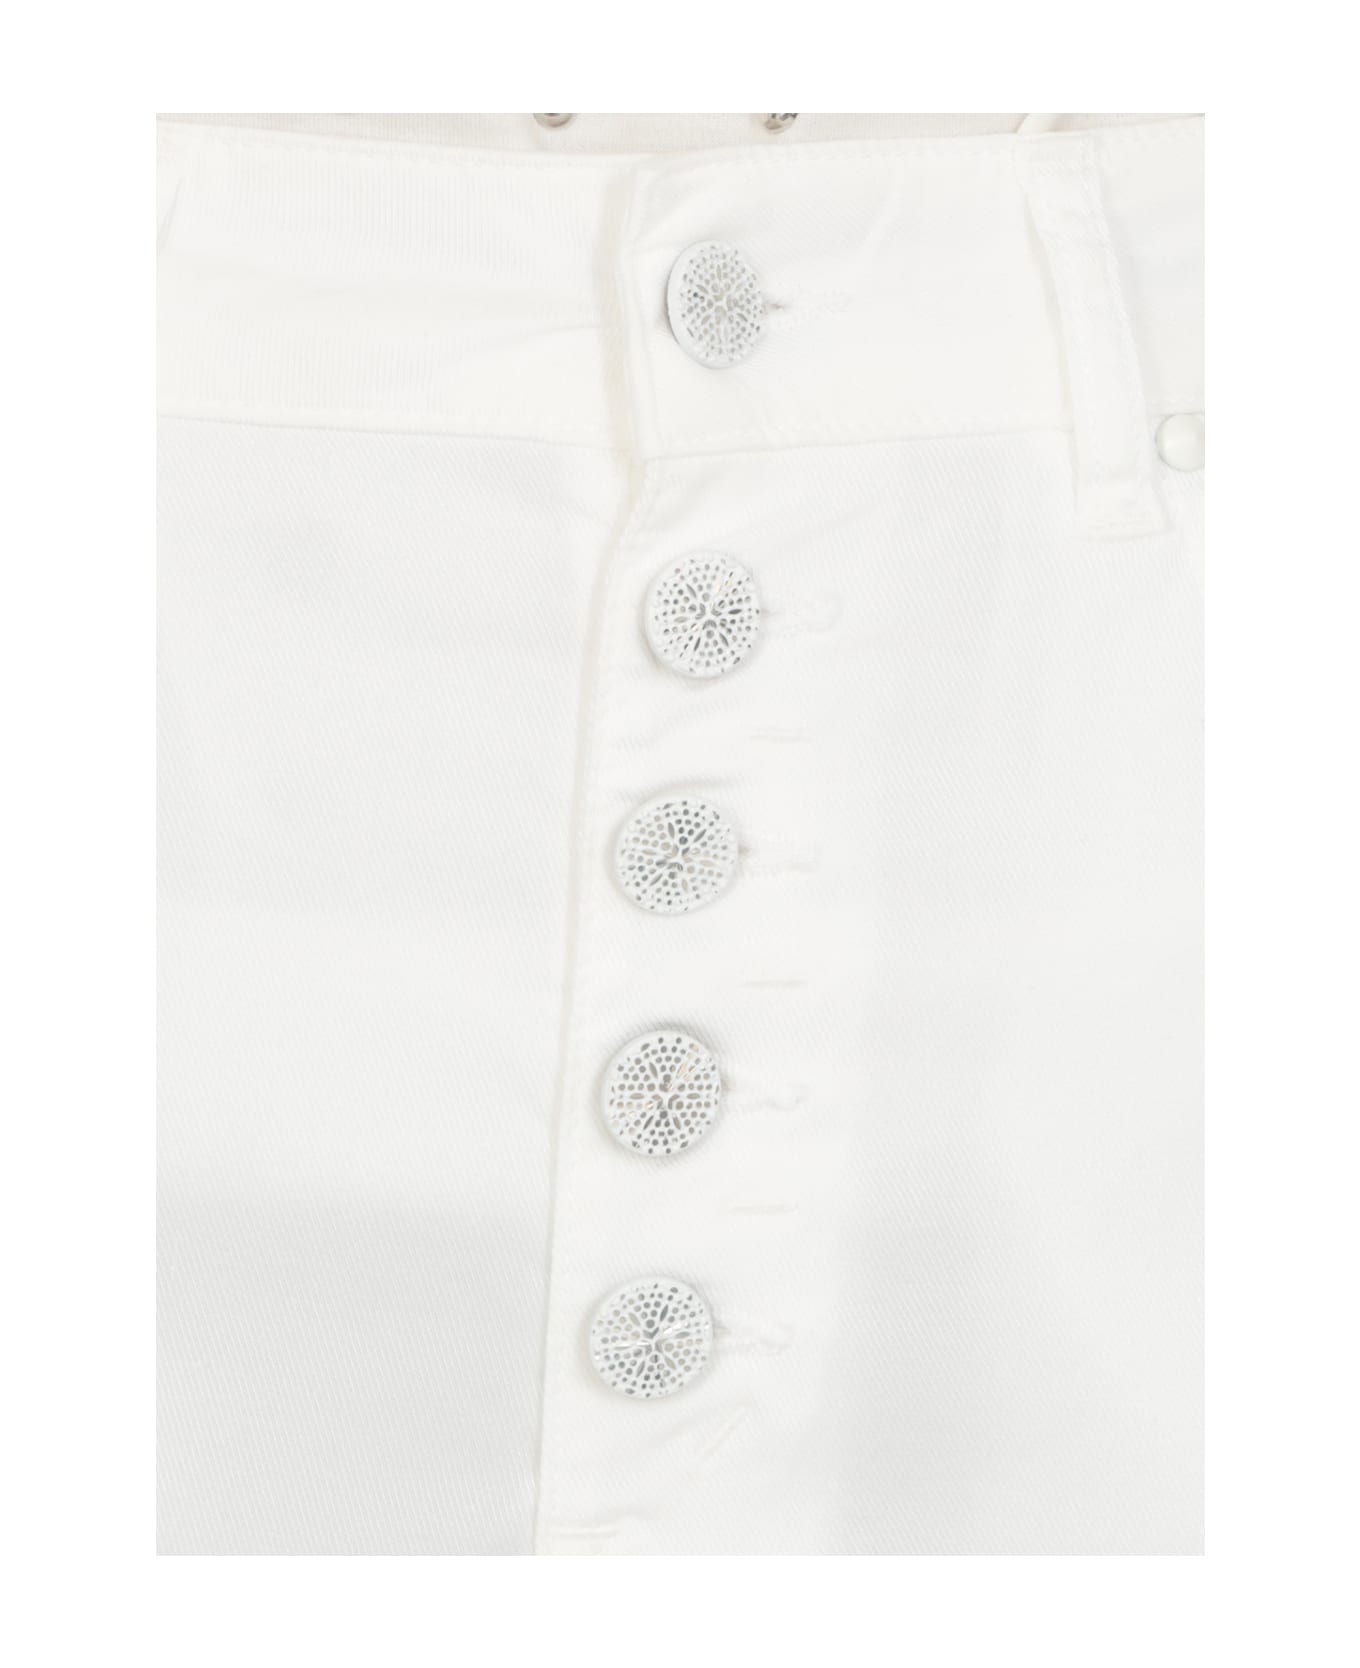 Dondup Cotton Blend Trousers - White